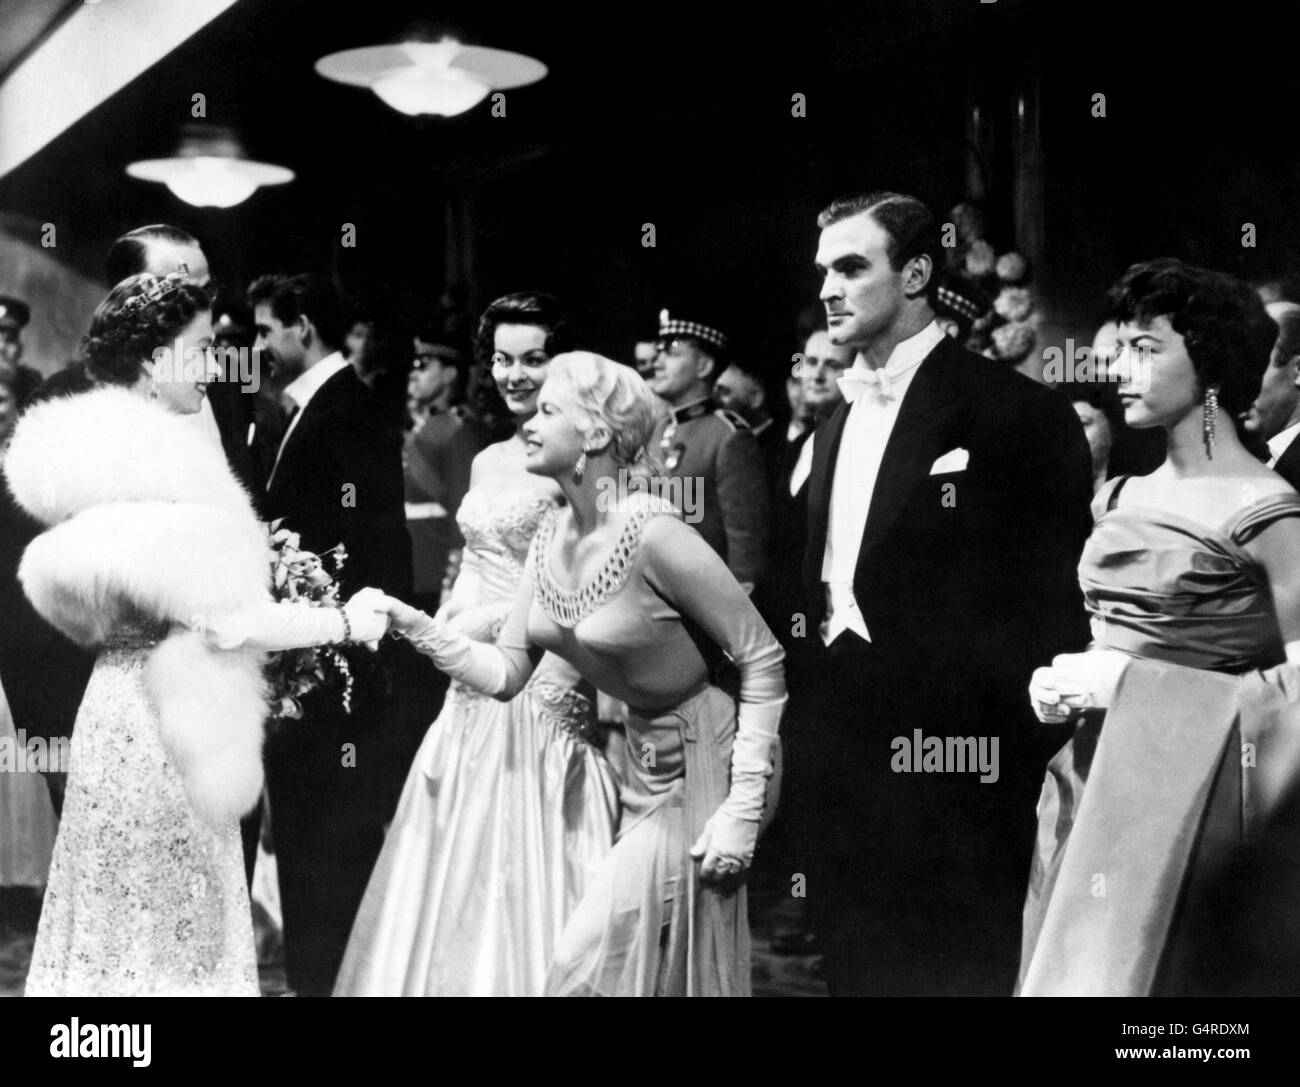 La regina Elisabetta II stringe le mani con l'attrice hollywoodiana Jayne Mansfield al Royal Film Performance di 'Les Girls' all'Odeon, Leicester Square, Londra. Altre stelle, da sinistra a destra, Anne Heywood, Stanley Baker e Dorothy Tutin. Foto Stock